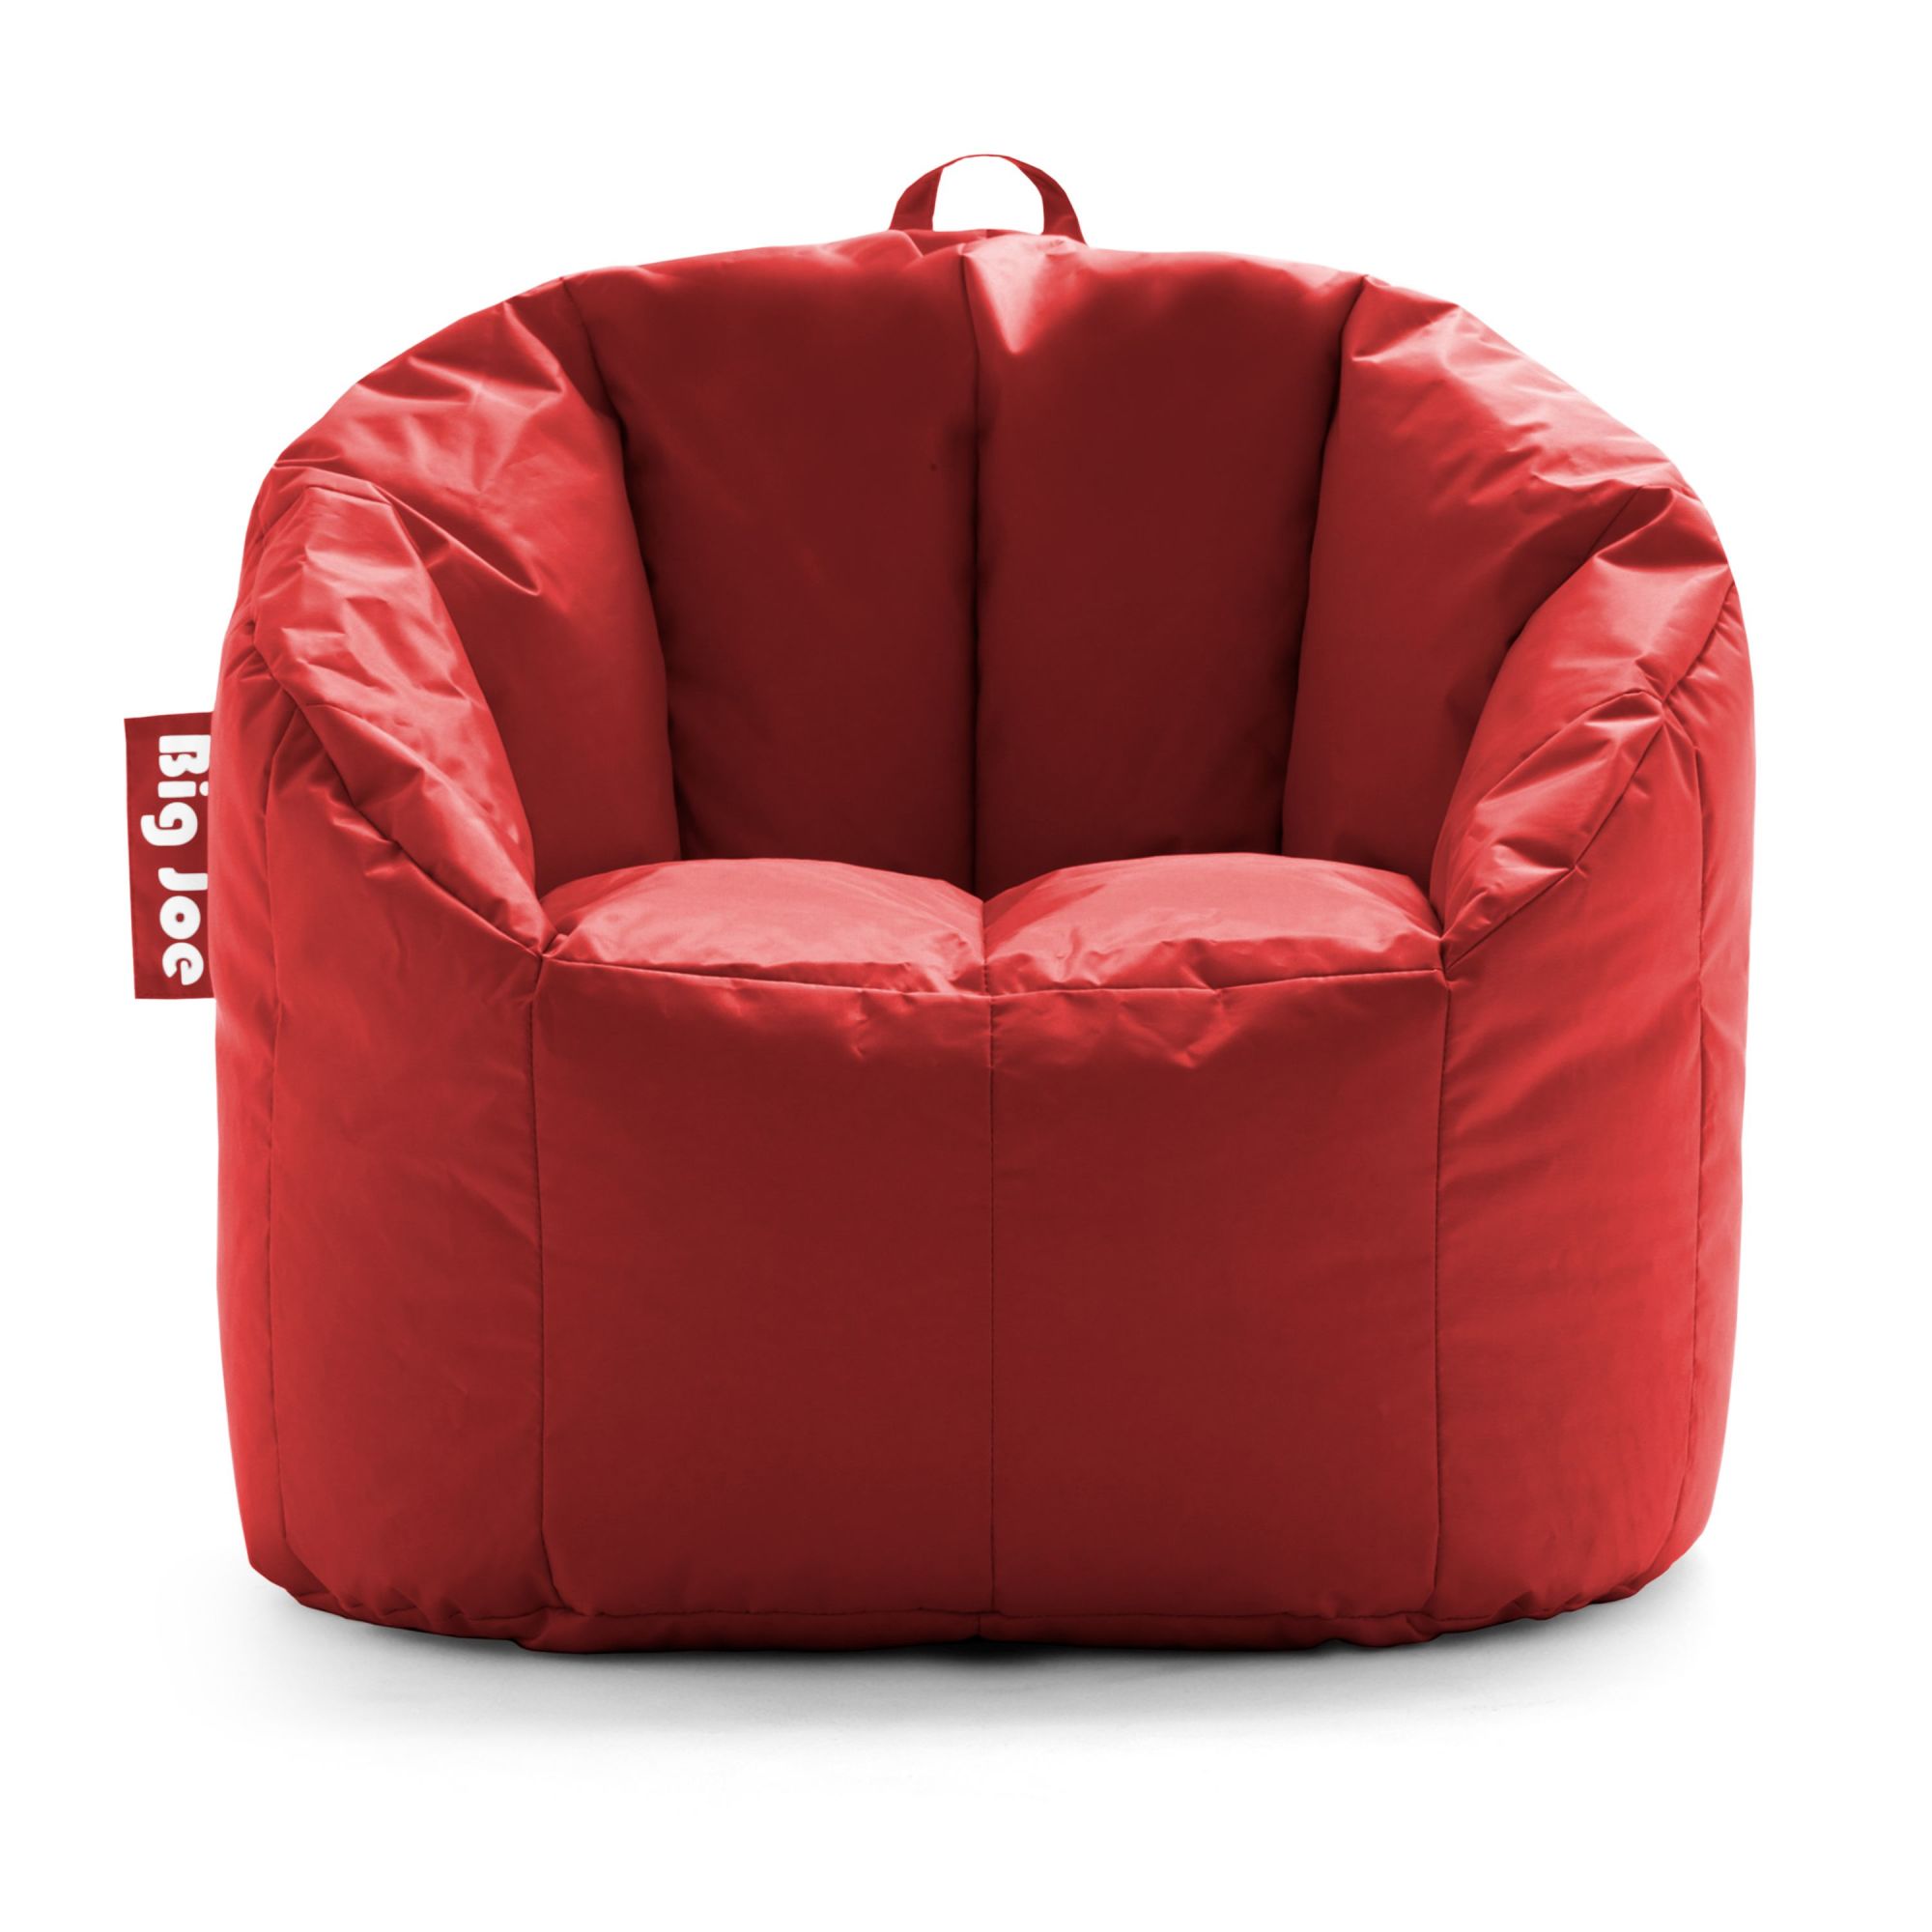 Big Joe Milano Bean Bag Chair, Red Smartmax, Durable Polyester Nylon Blend, 2.5 feet - image 1 of 8